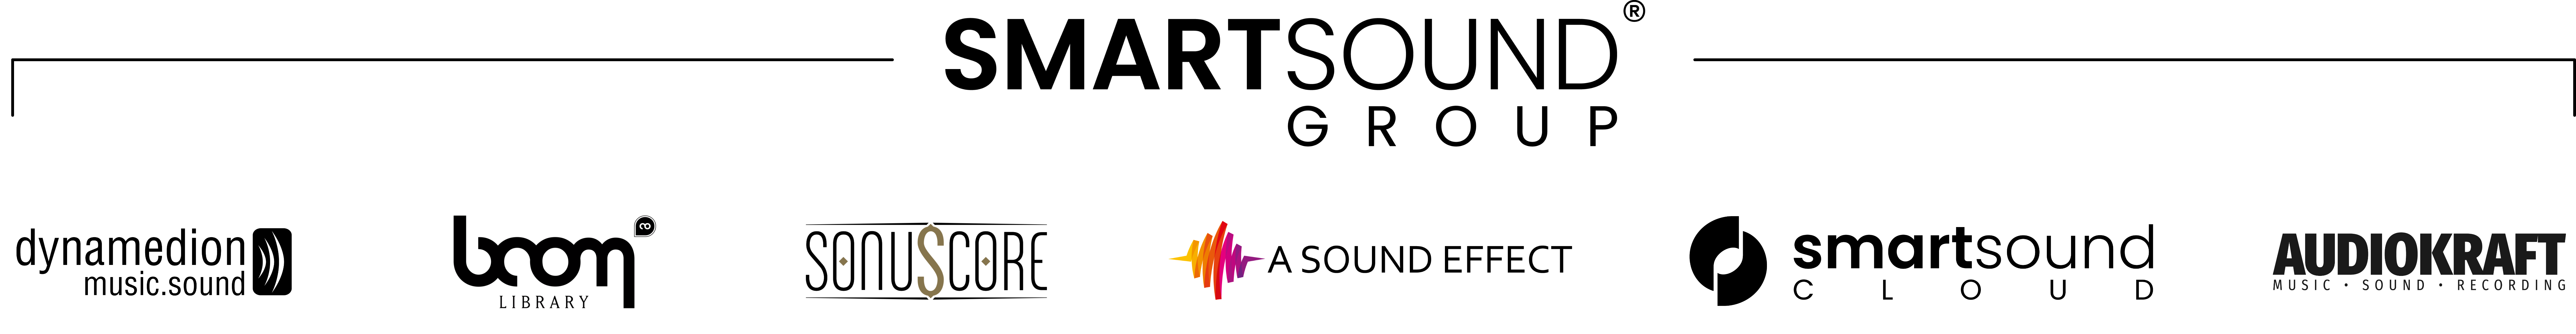 Smartsound Group Logos